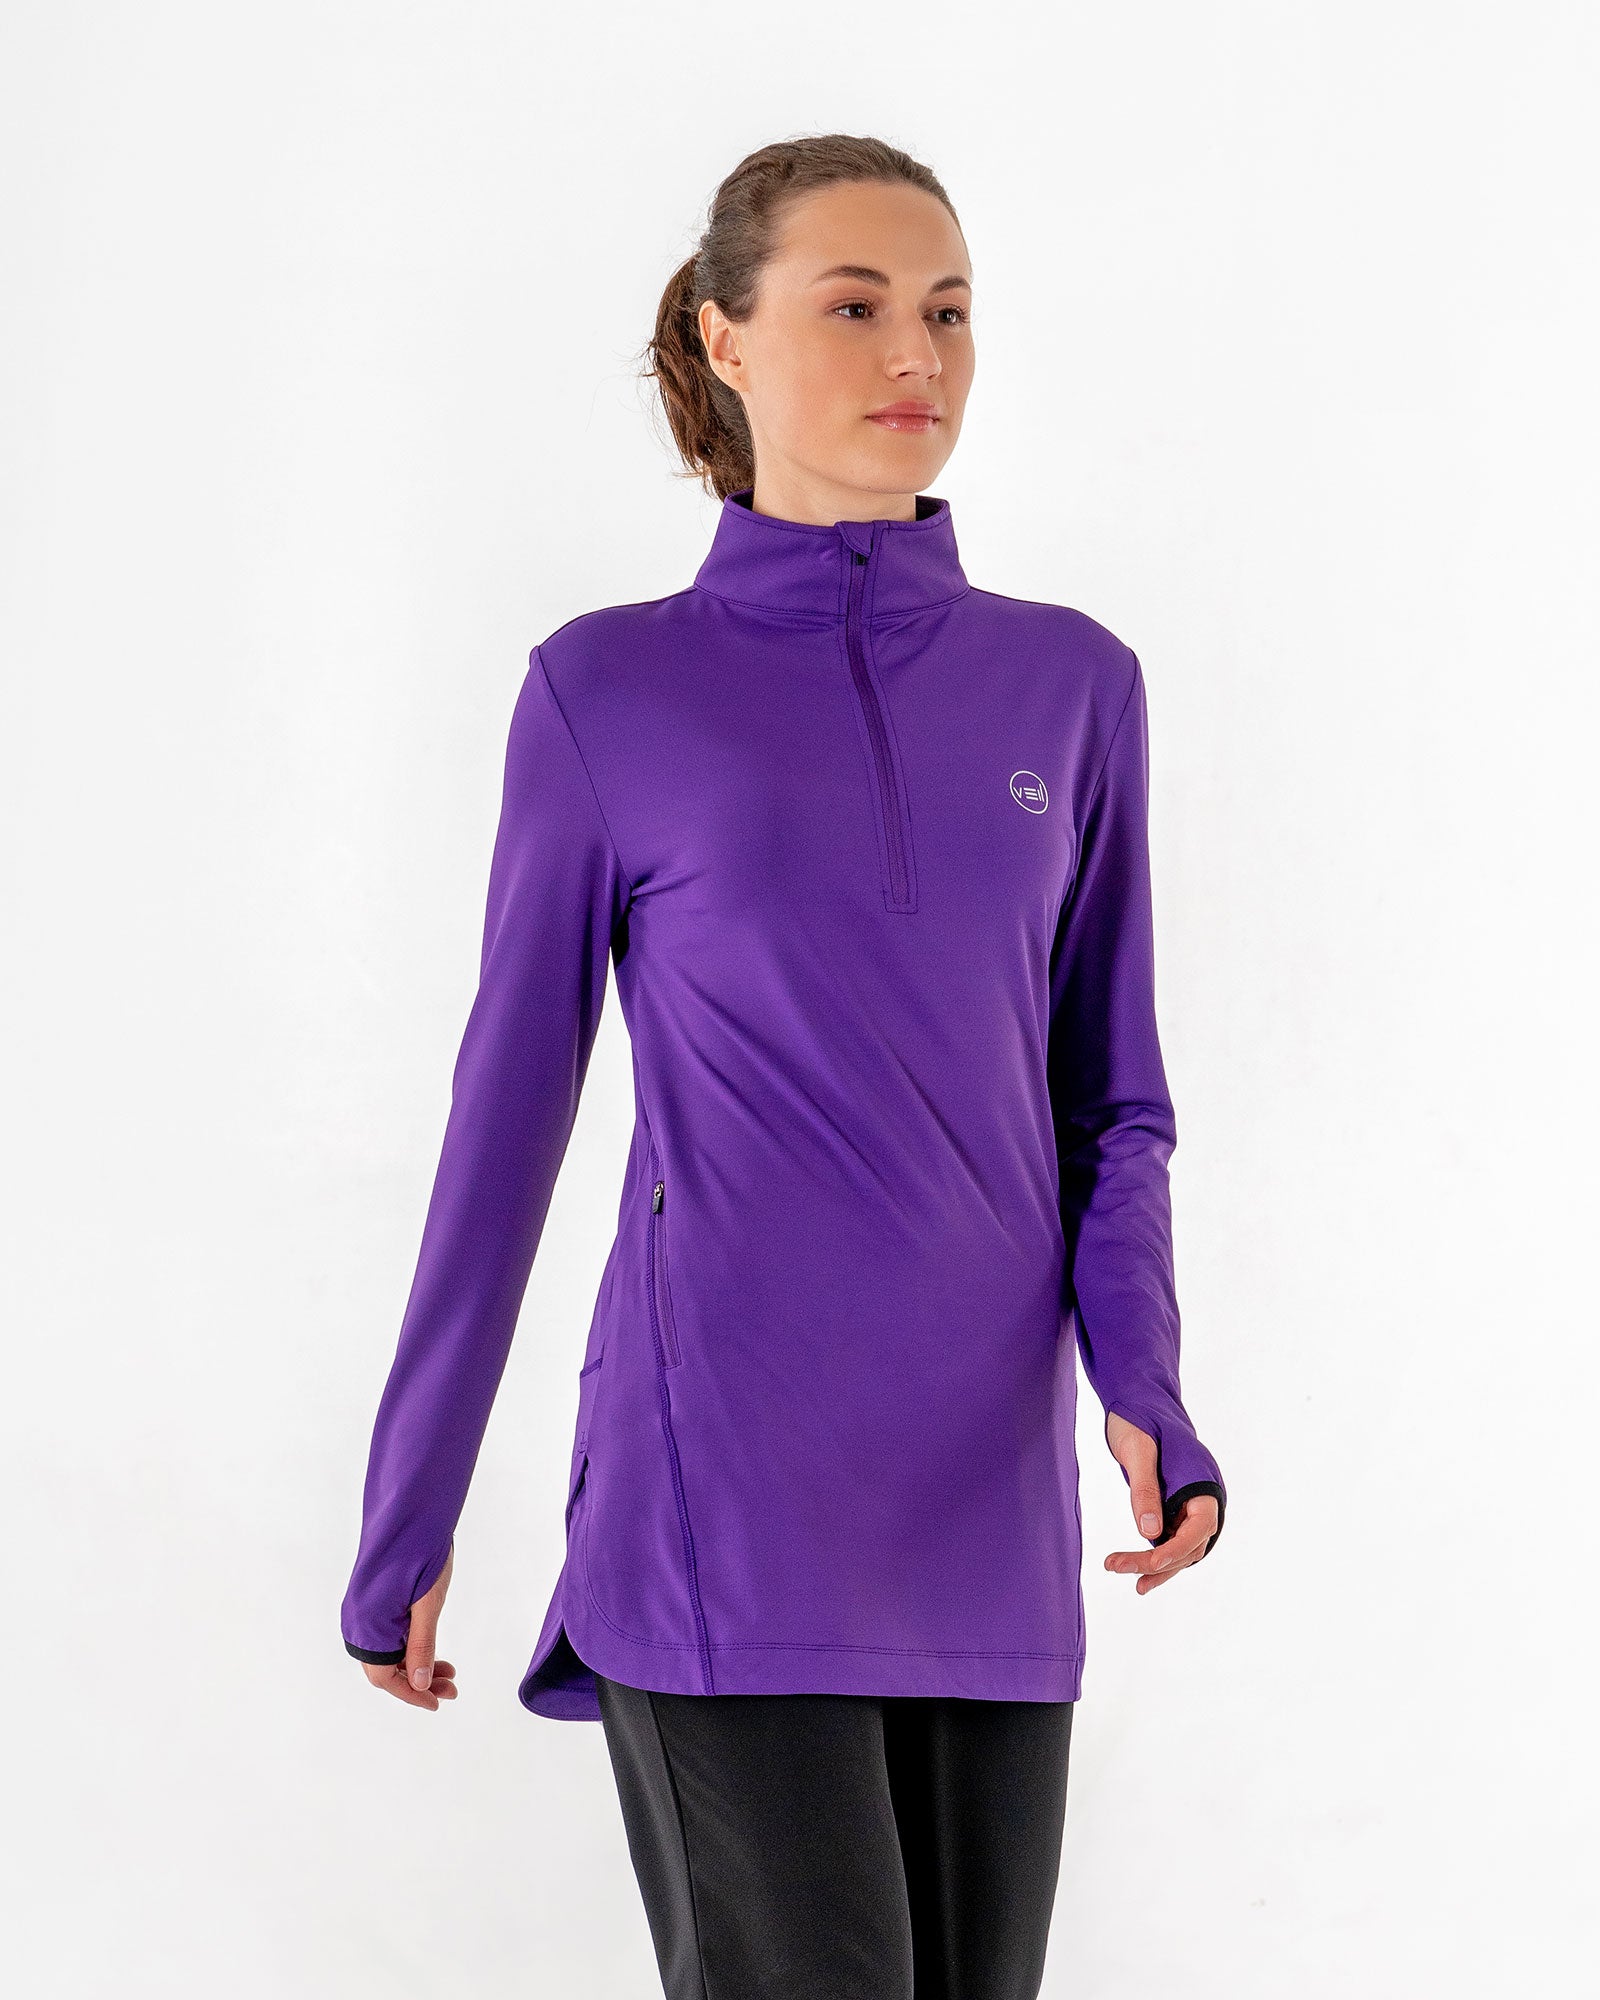 Spark Half-Zip in purple by Veil Garments. Modest activewear collection.